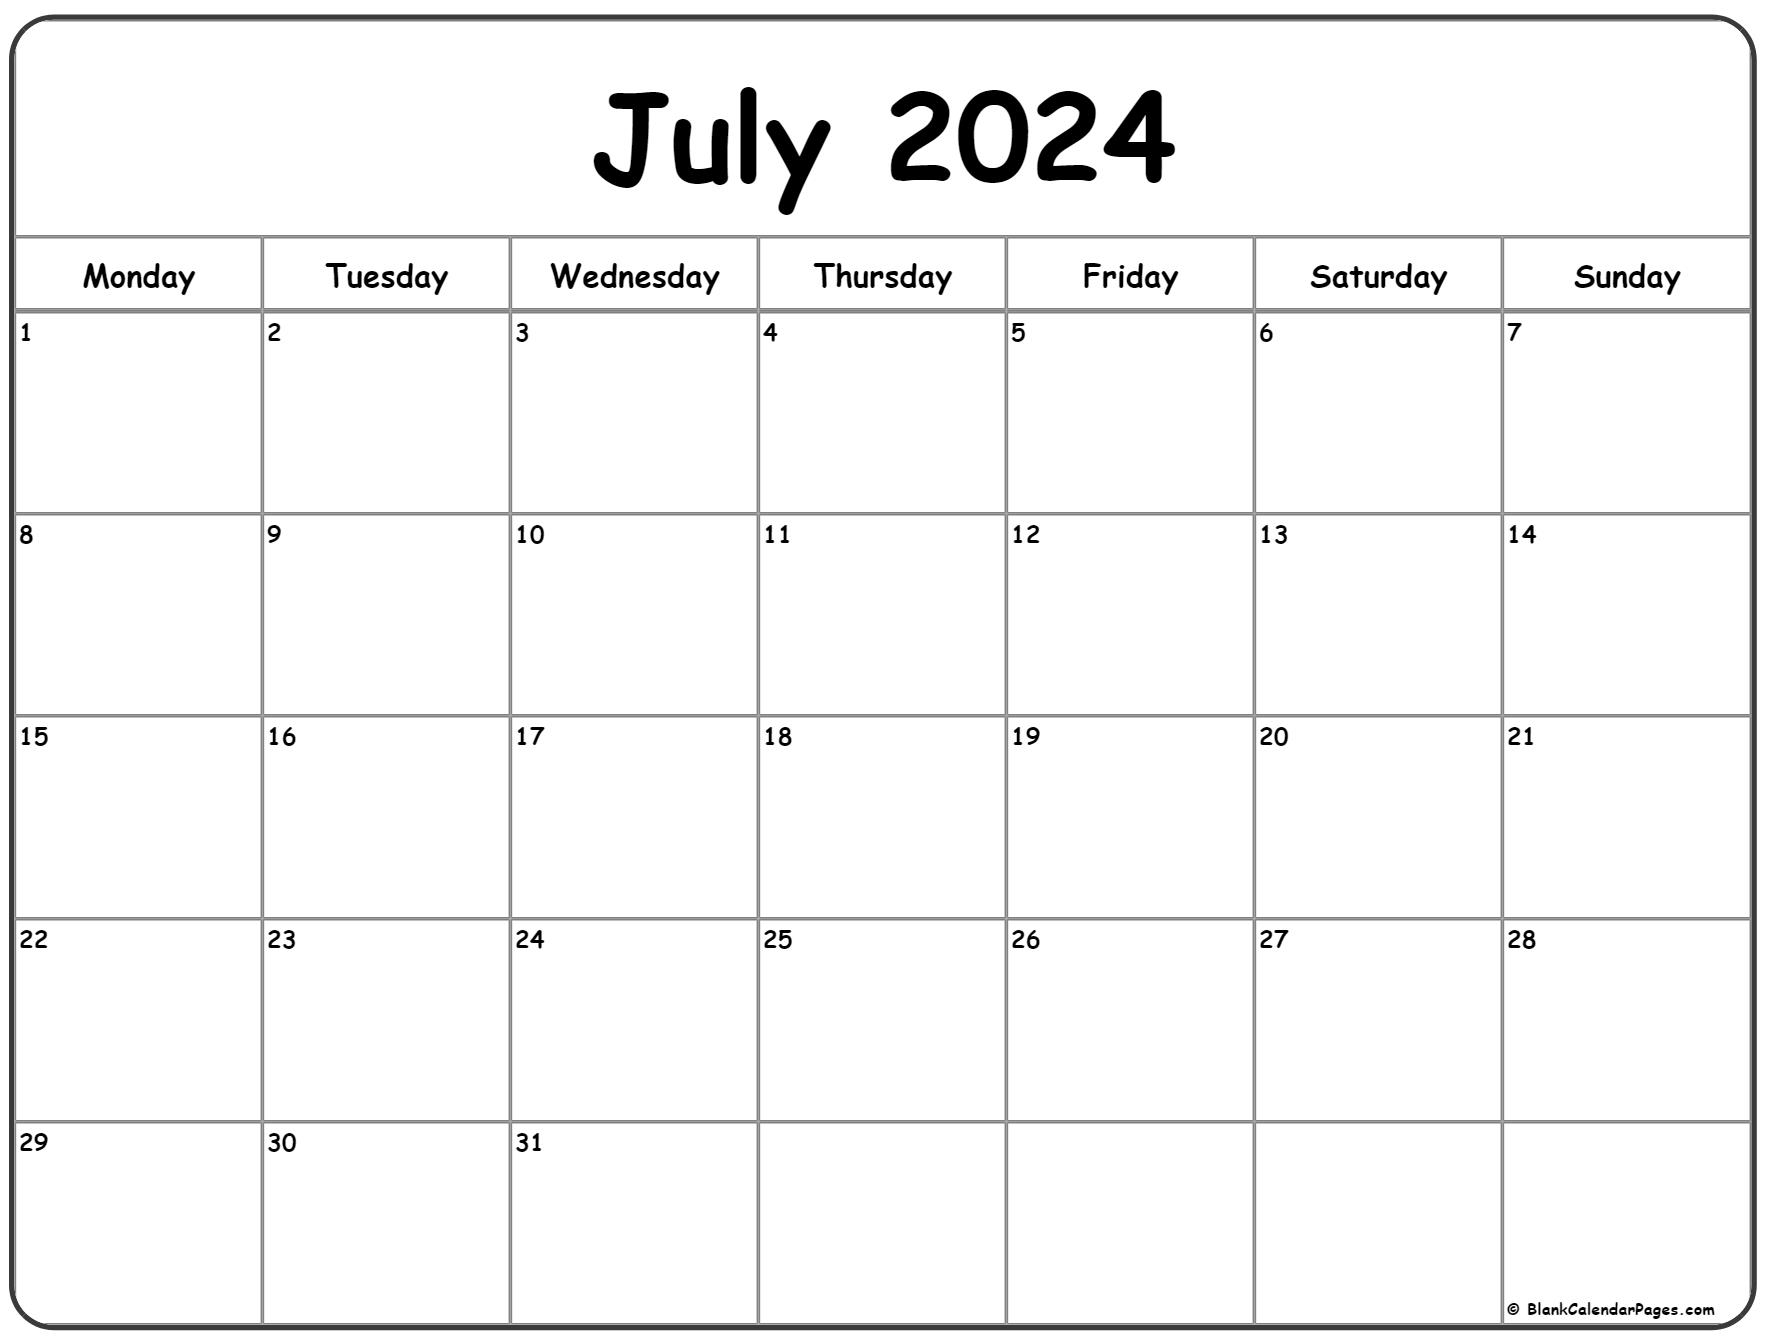 July 2024 Monday Calendar | Monday To Sunday for Calendar Printable July 2024